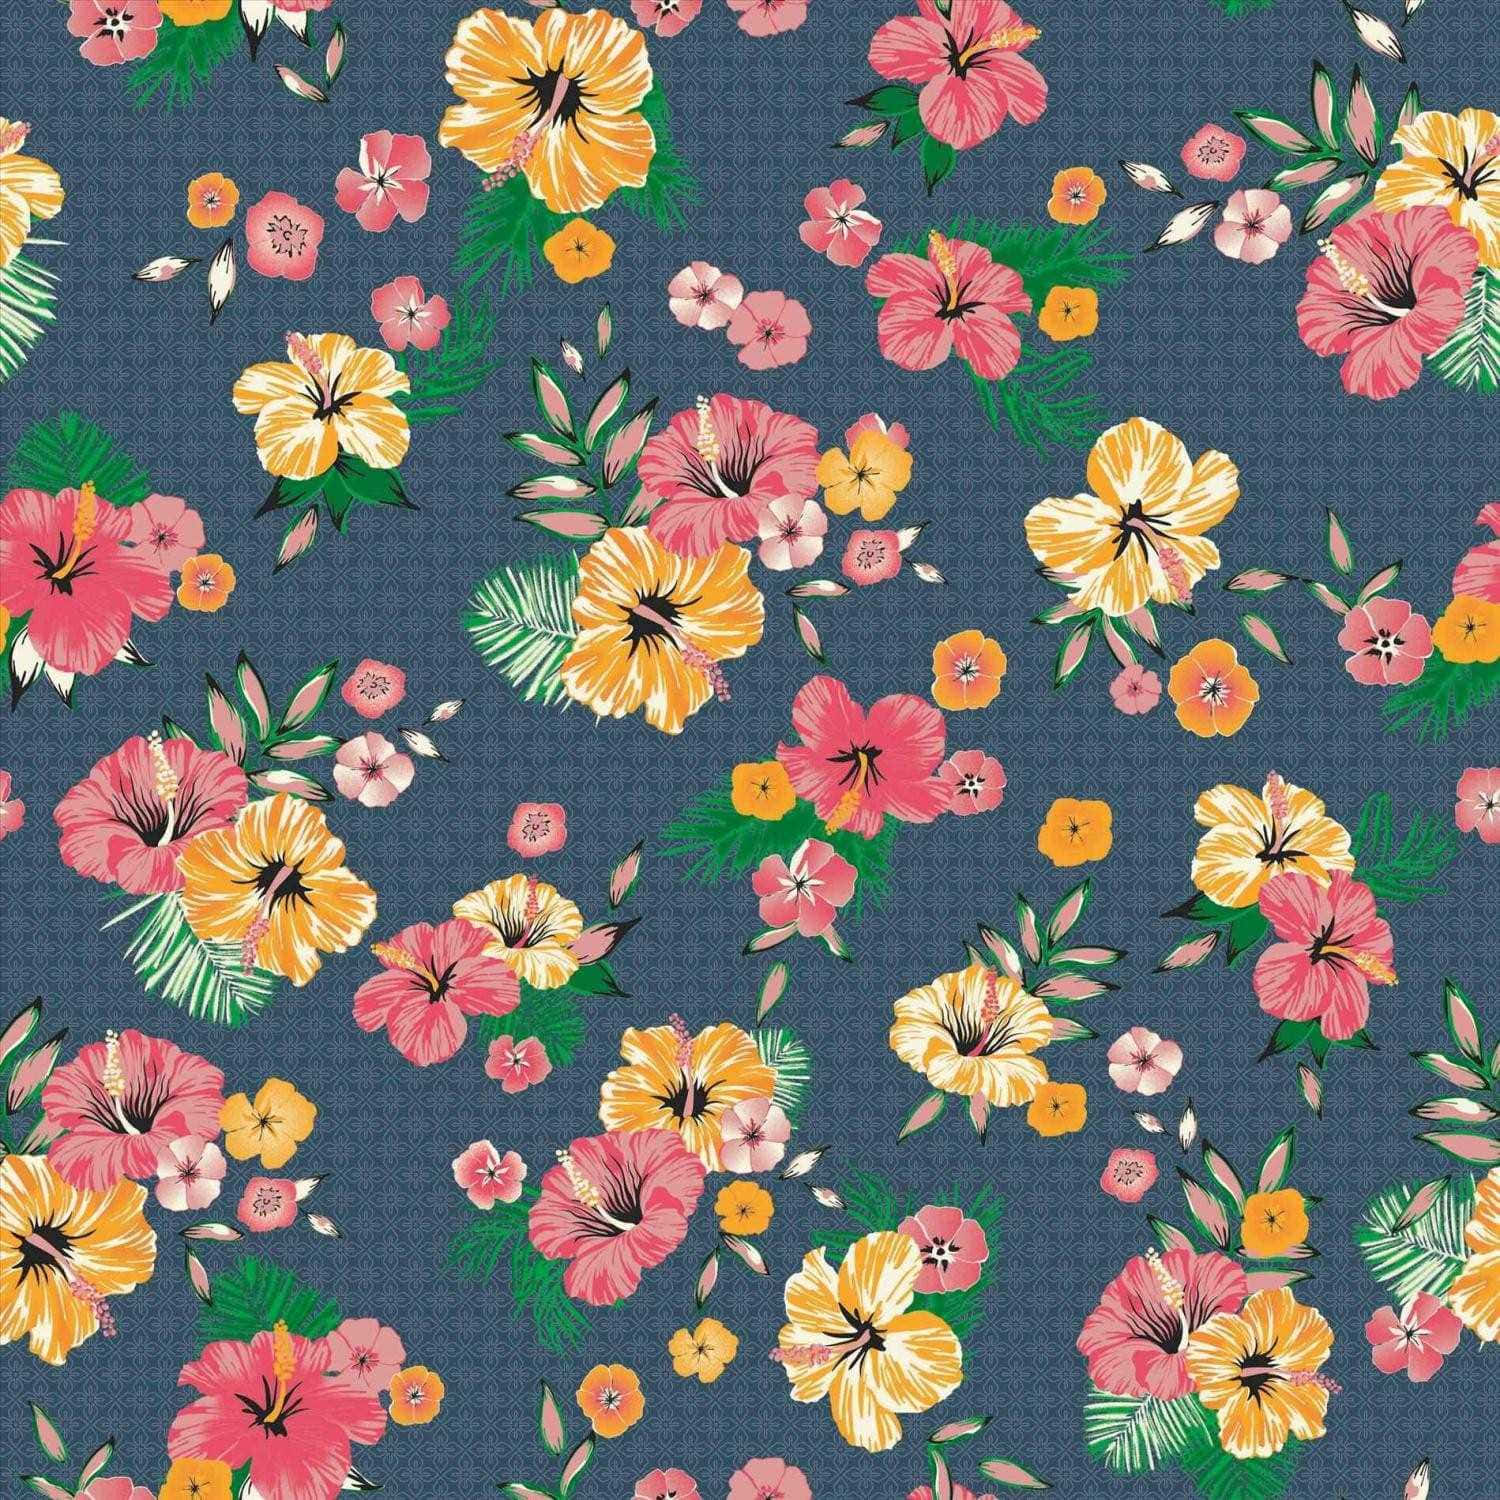 Vibrant Tumblr-inspired Floral Background